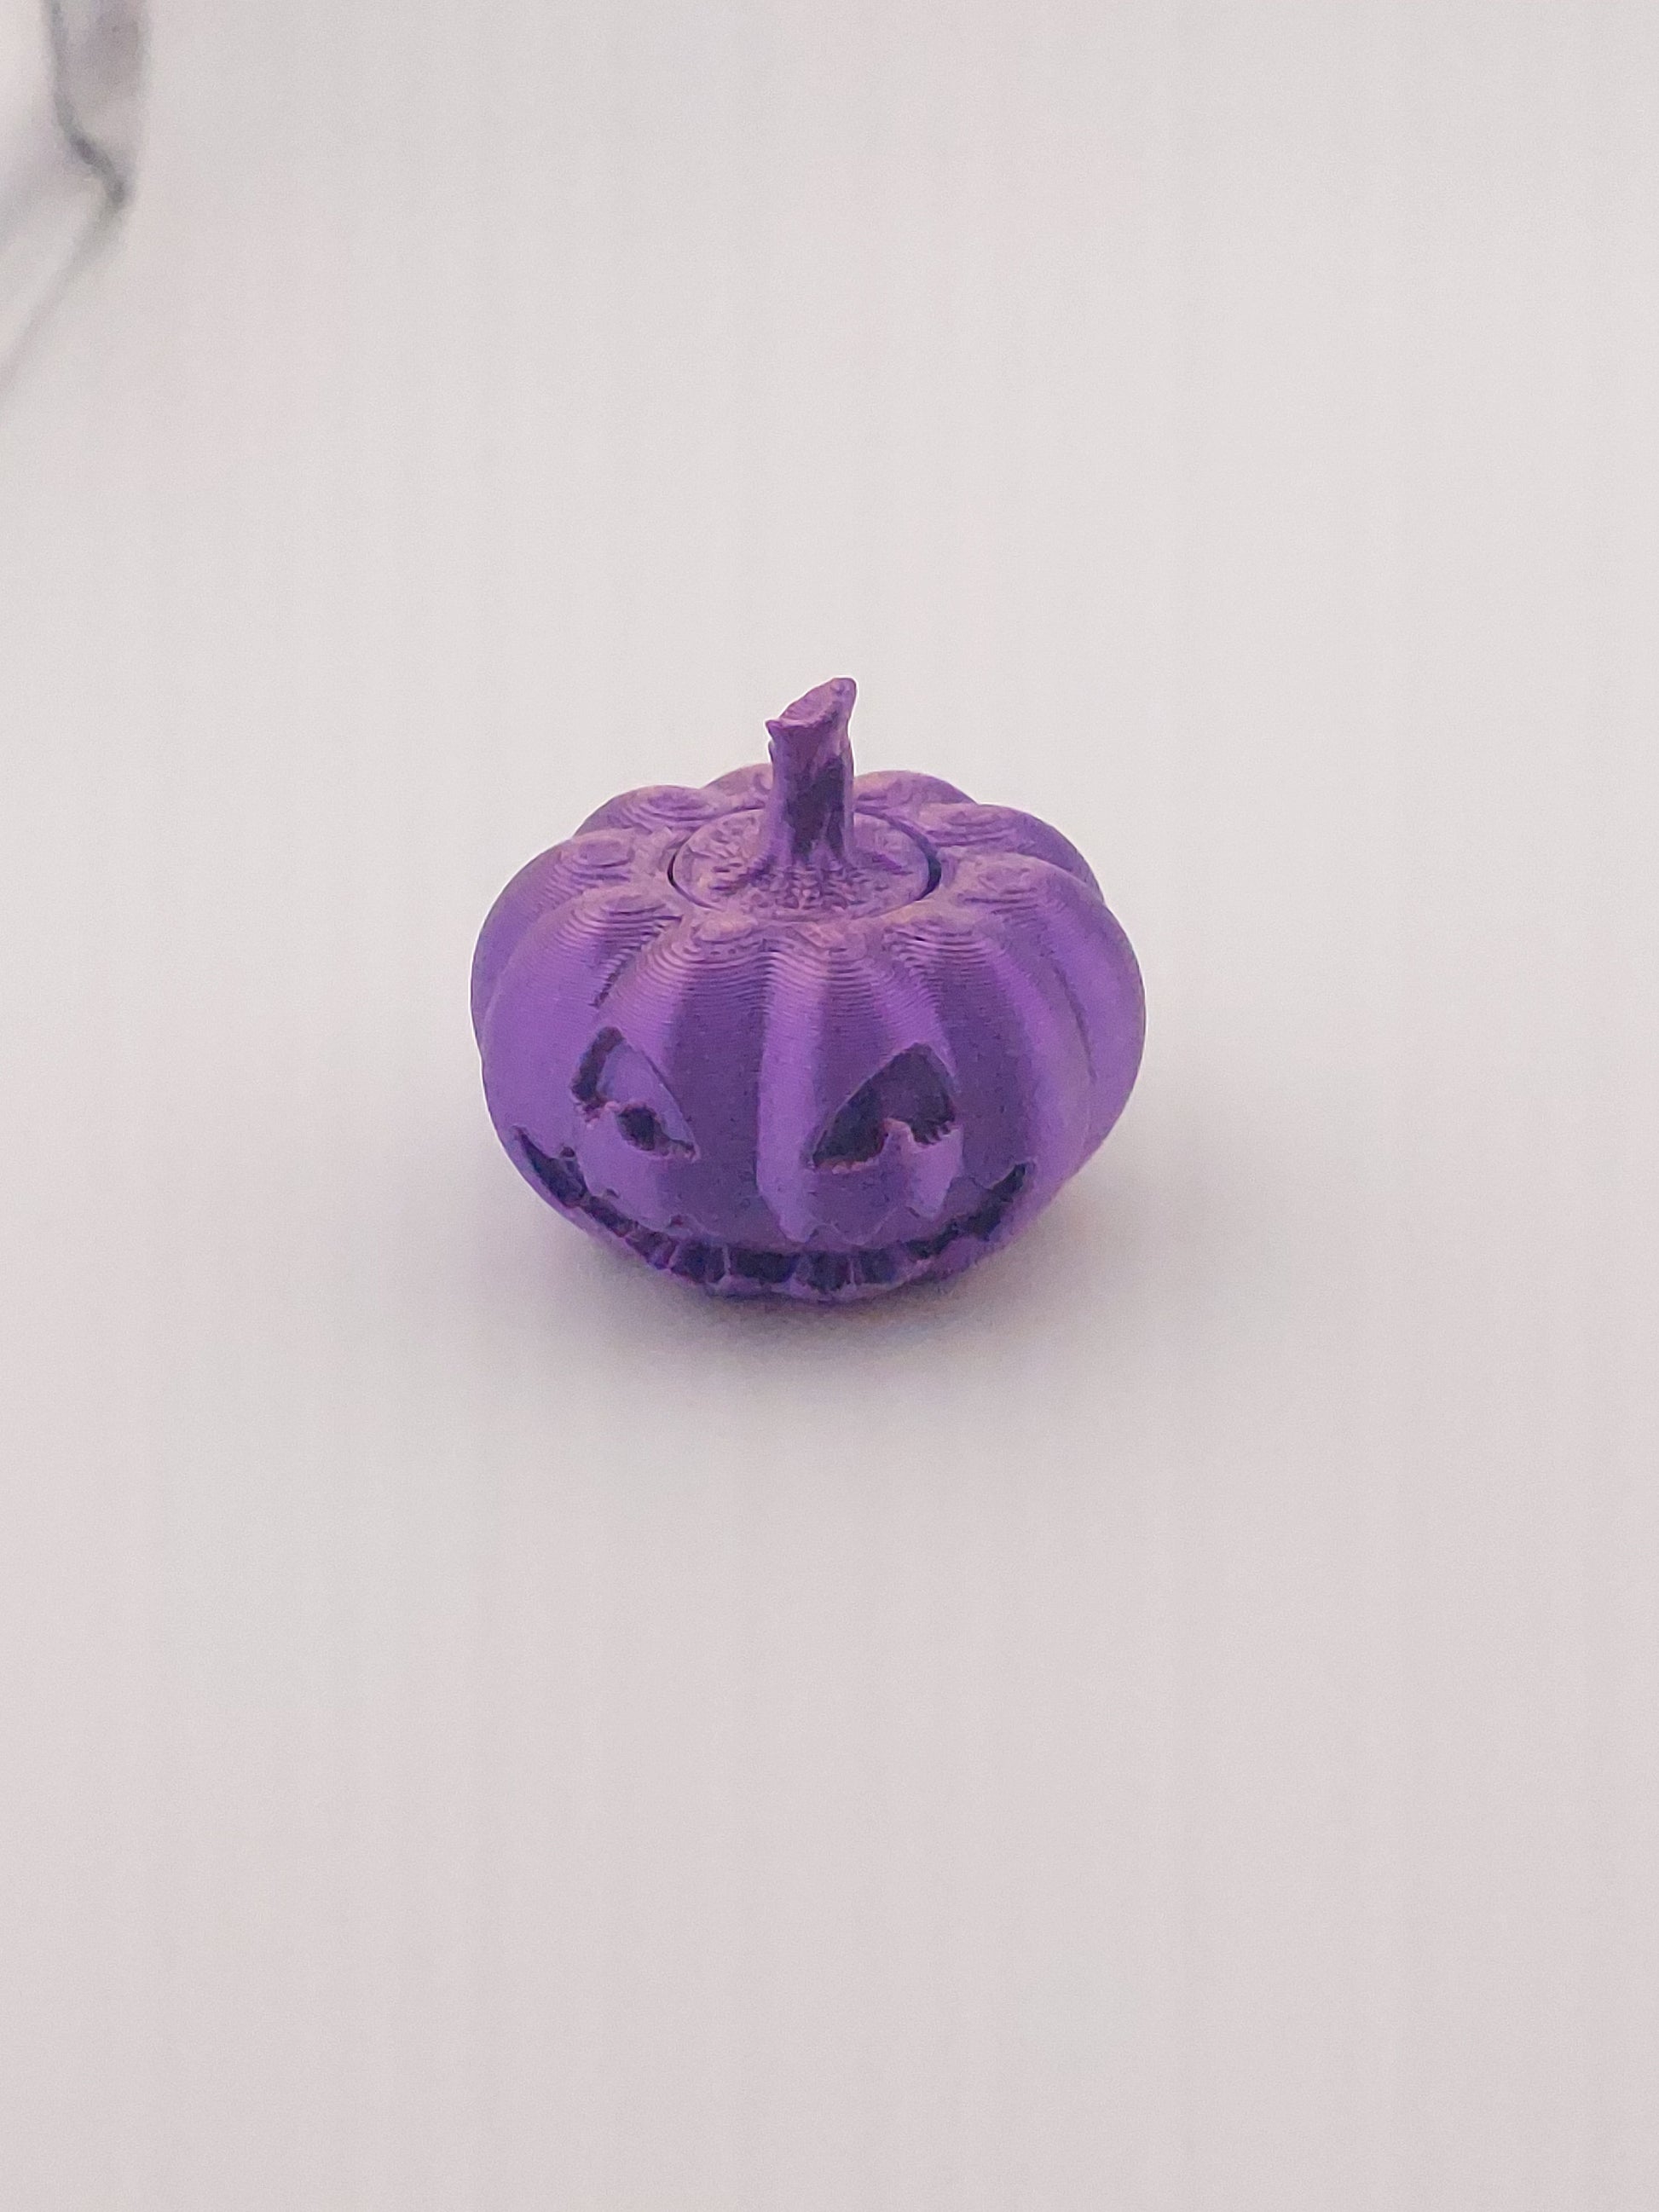 1 Articulated Fidget Pumpkin Spinner -- Decor Gift - 3D Printed Fidget Fantasy Creature - Customizable Colors - Authorized Seller